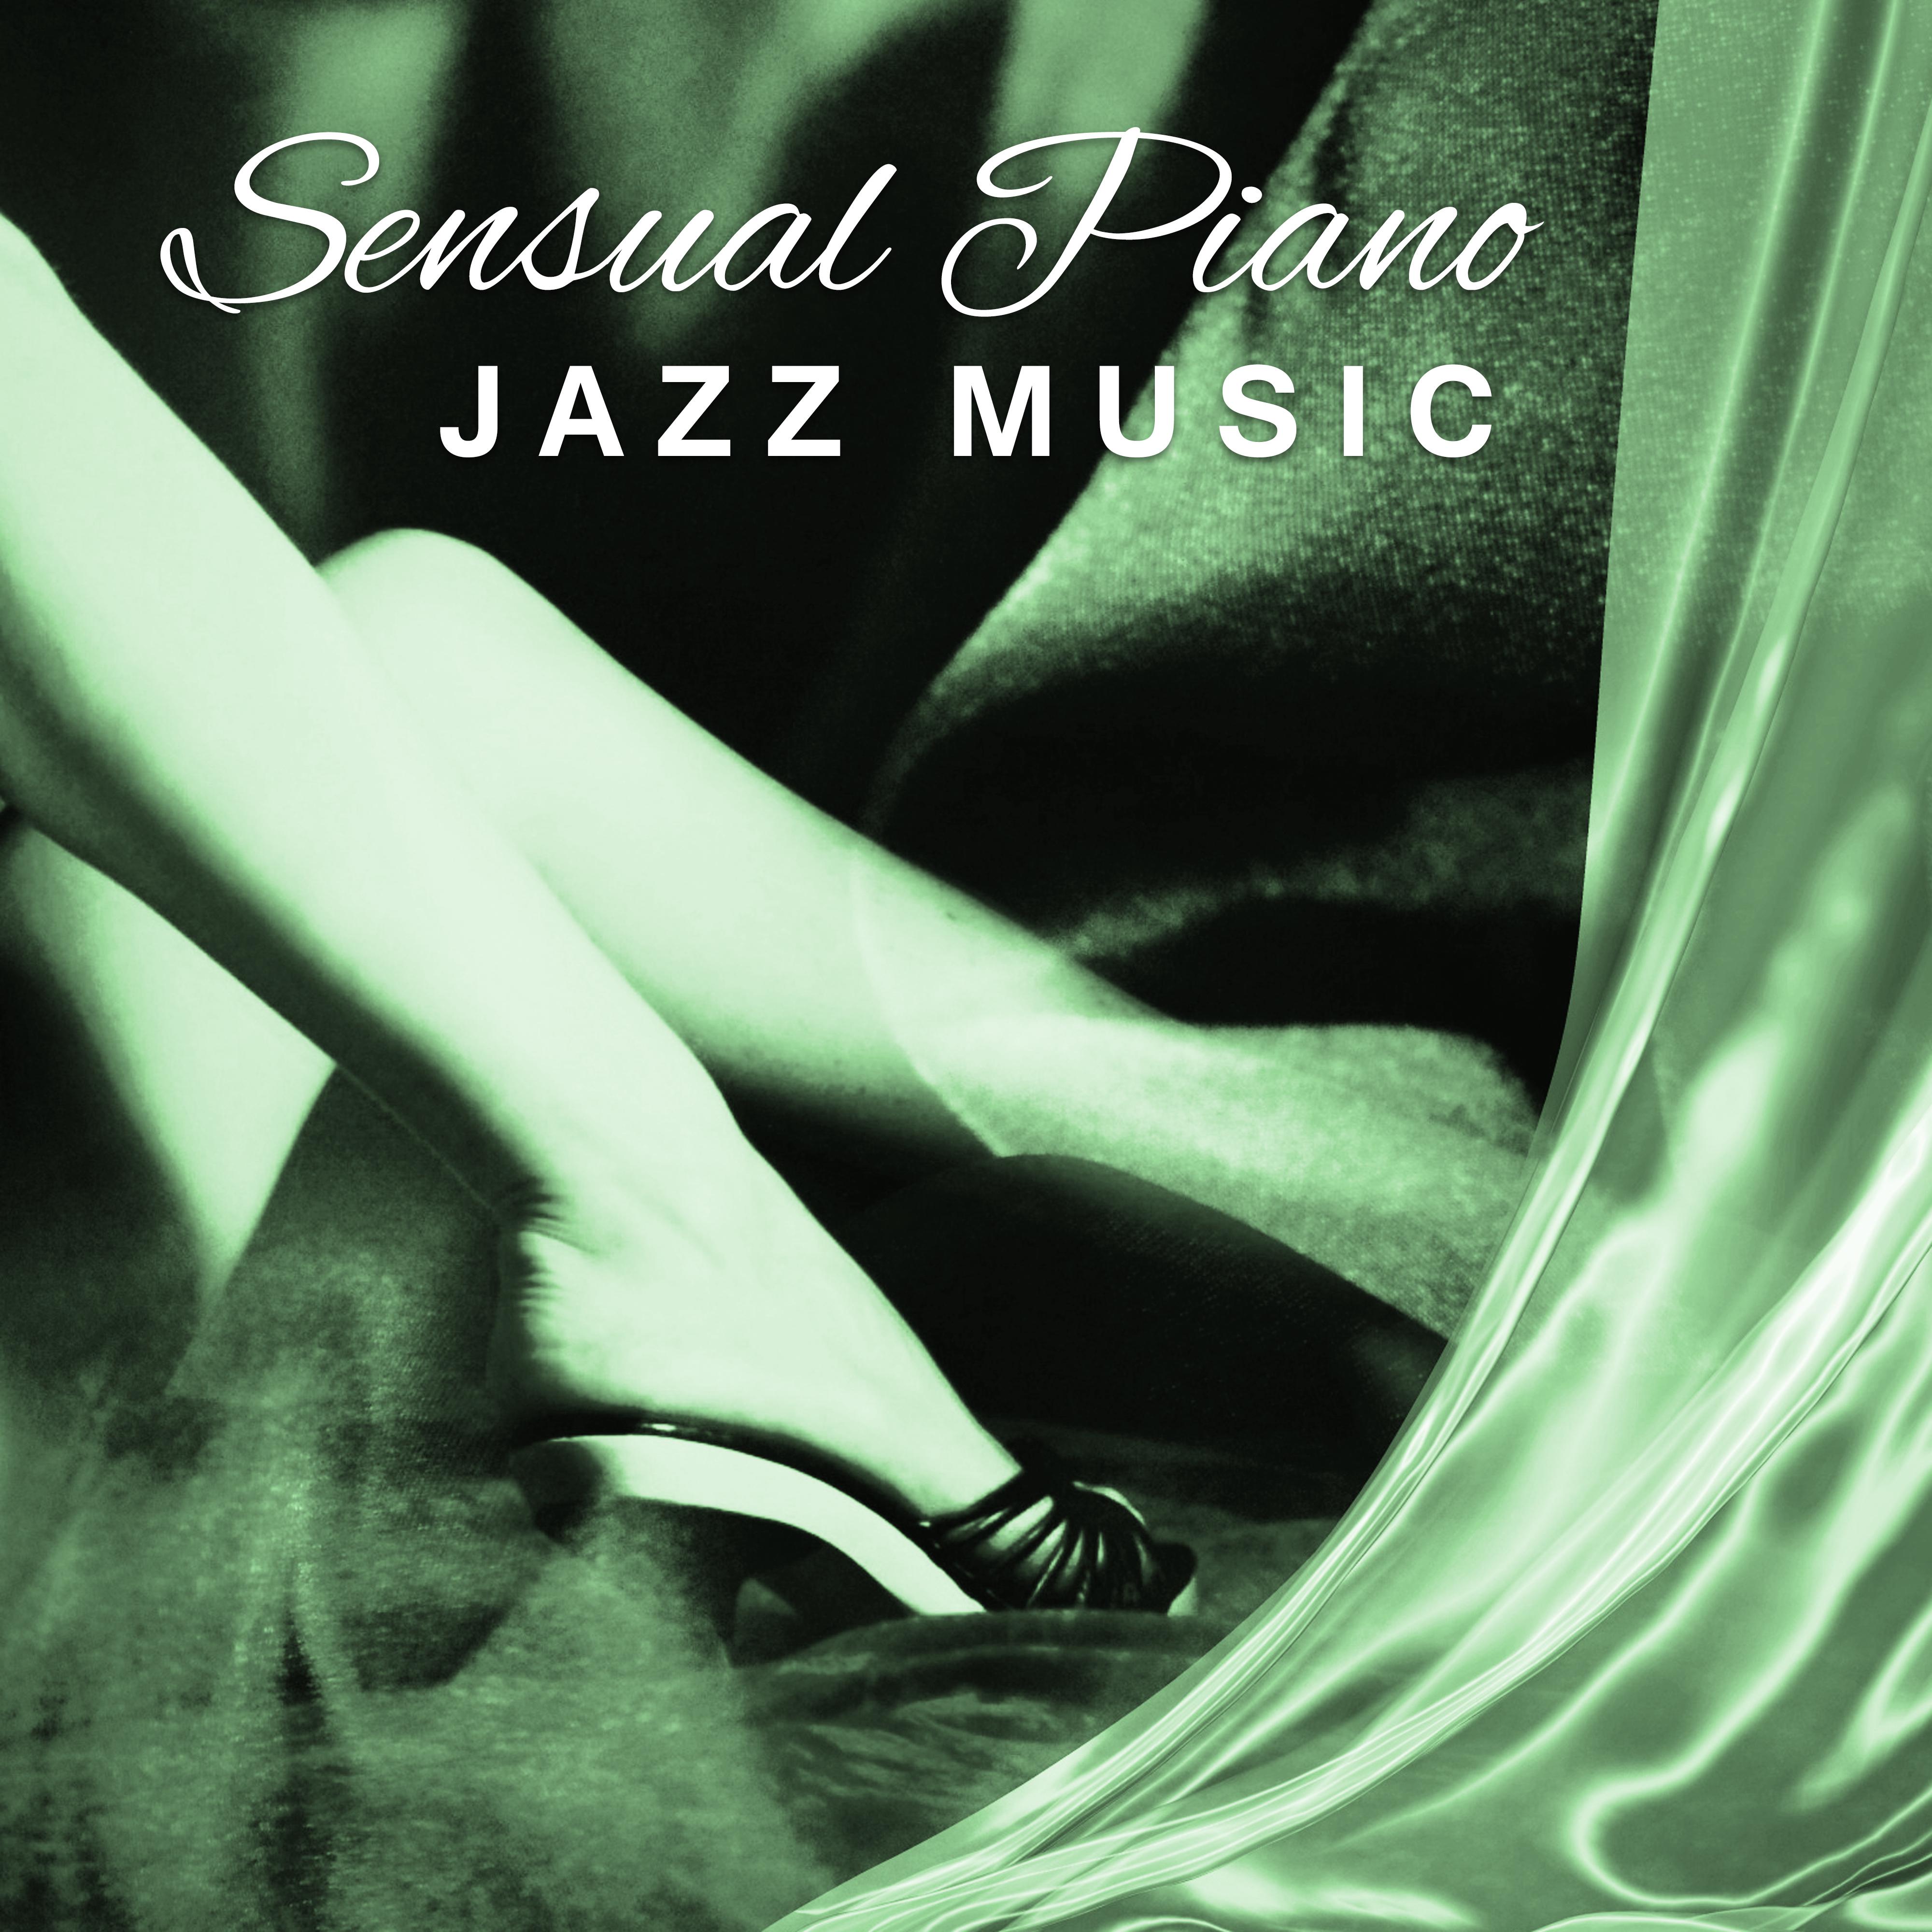 Sensual Piano Jazz Music  Romantic Jazz Sounds, Soft Piano Bar, Erotic Night with Jazz